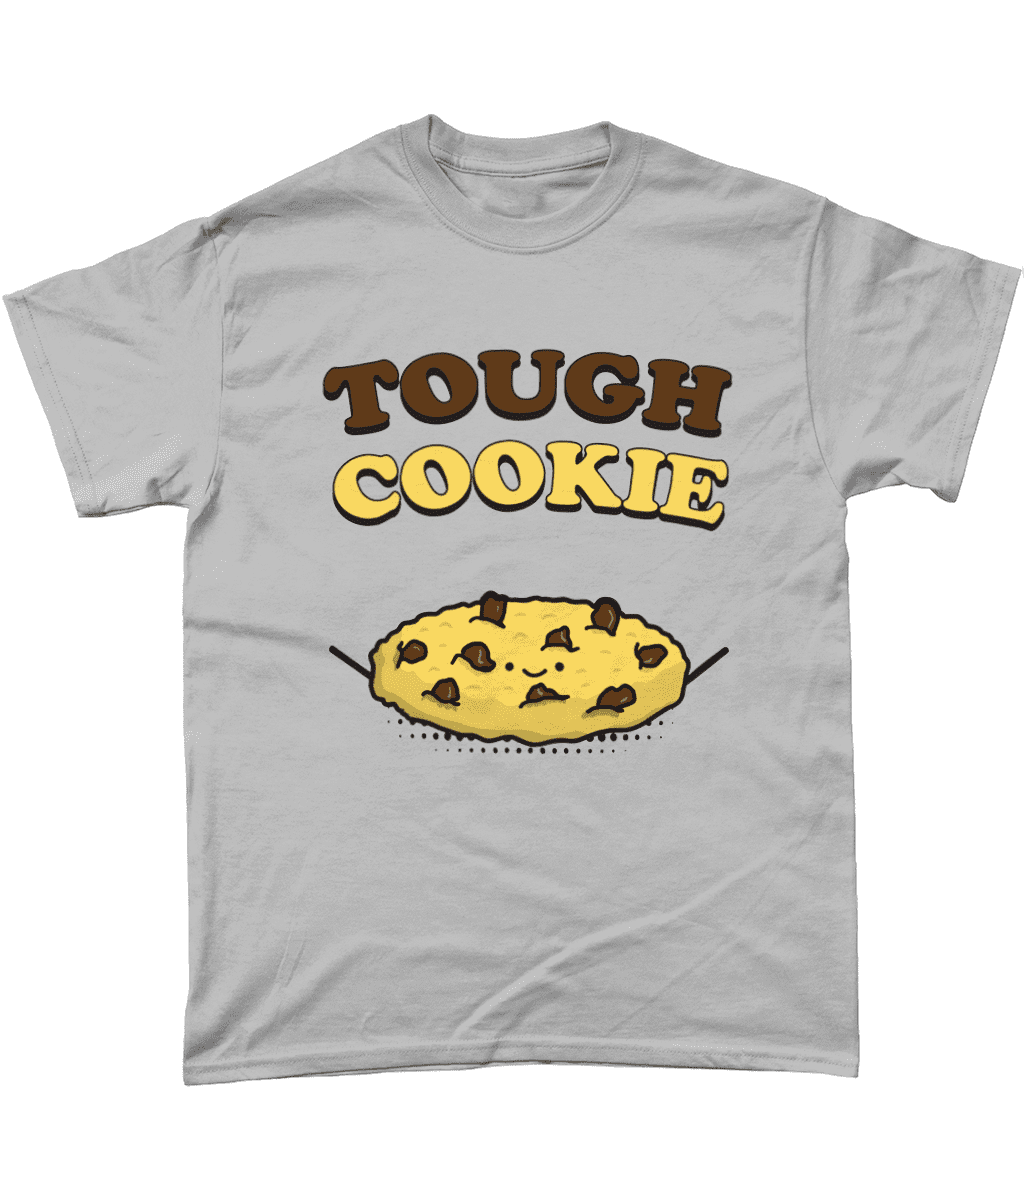 Tough Cookie Cute British Food Men's T-Shirt Sports Grey